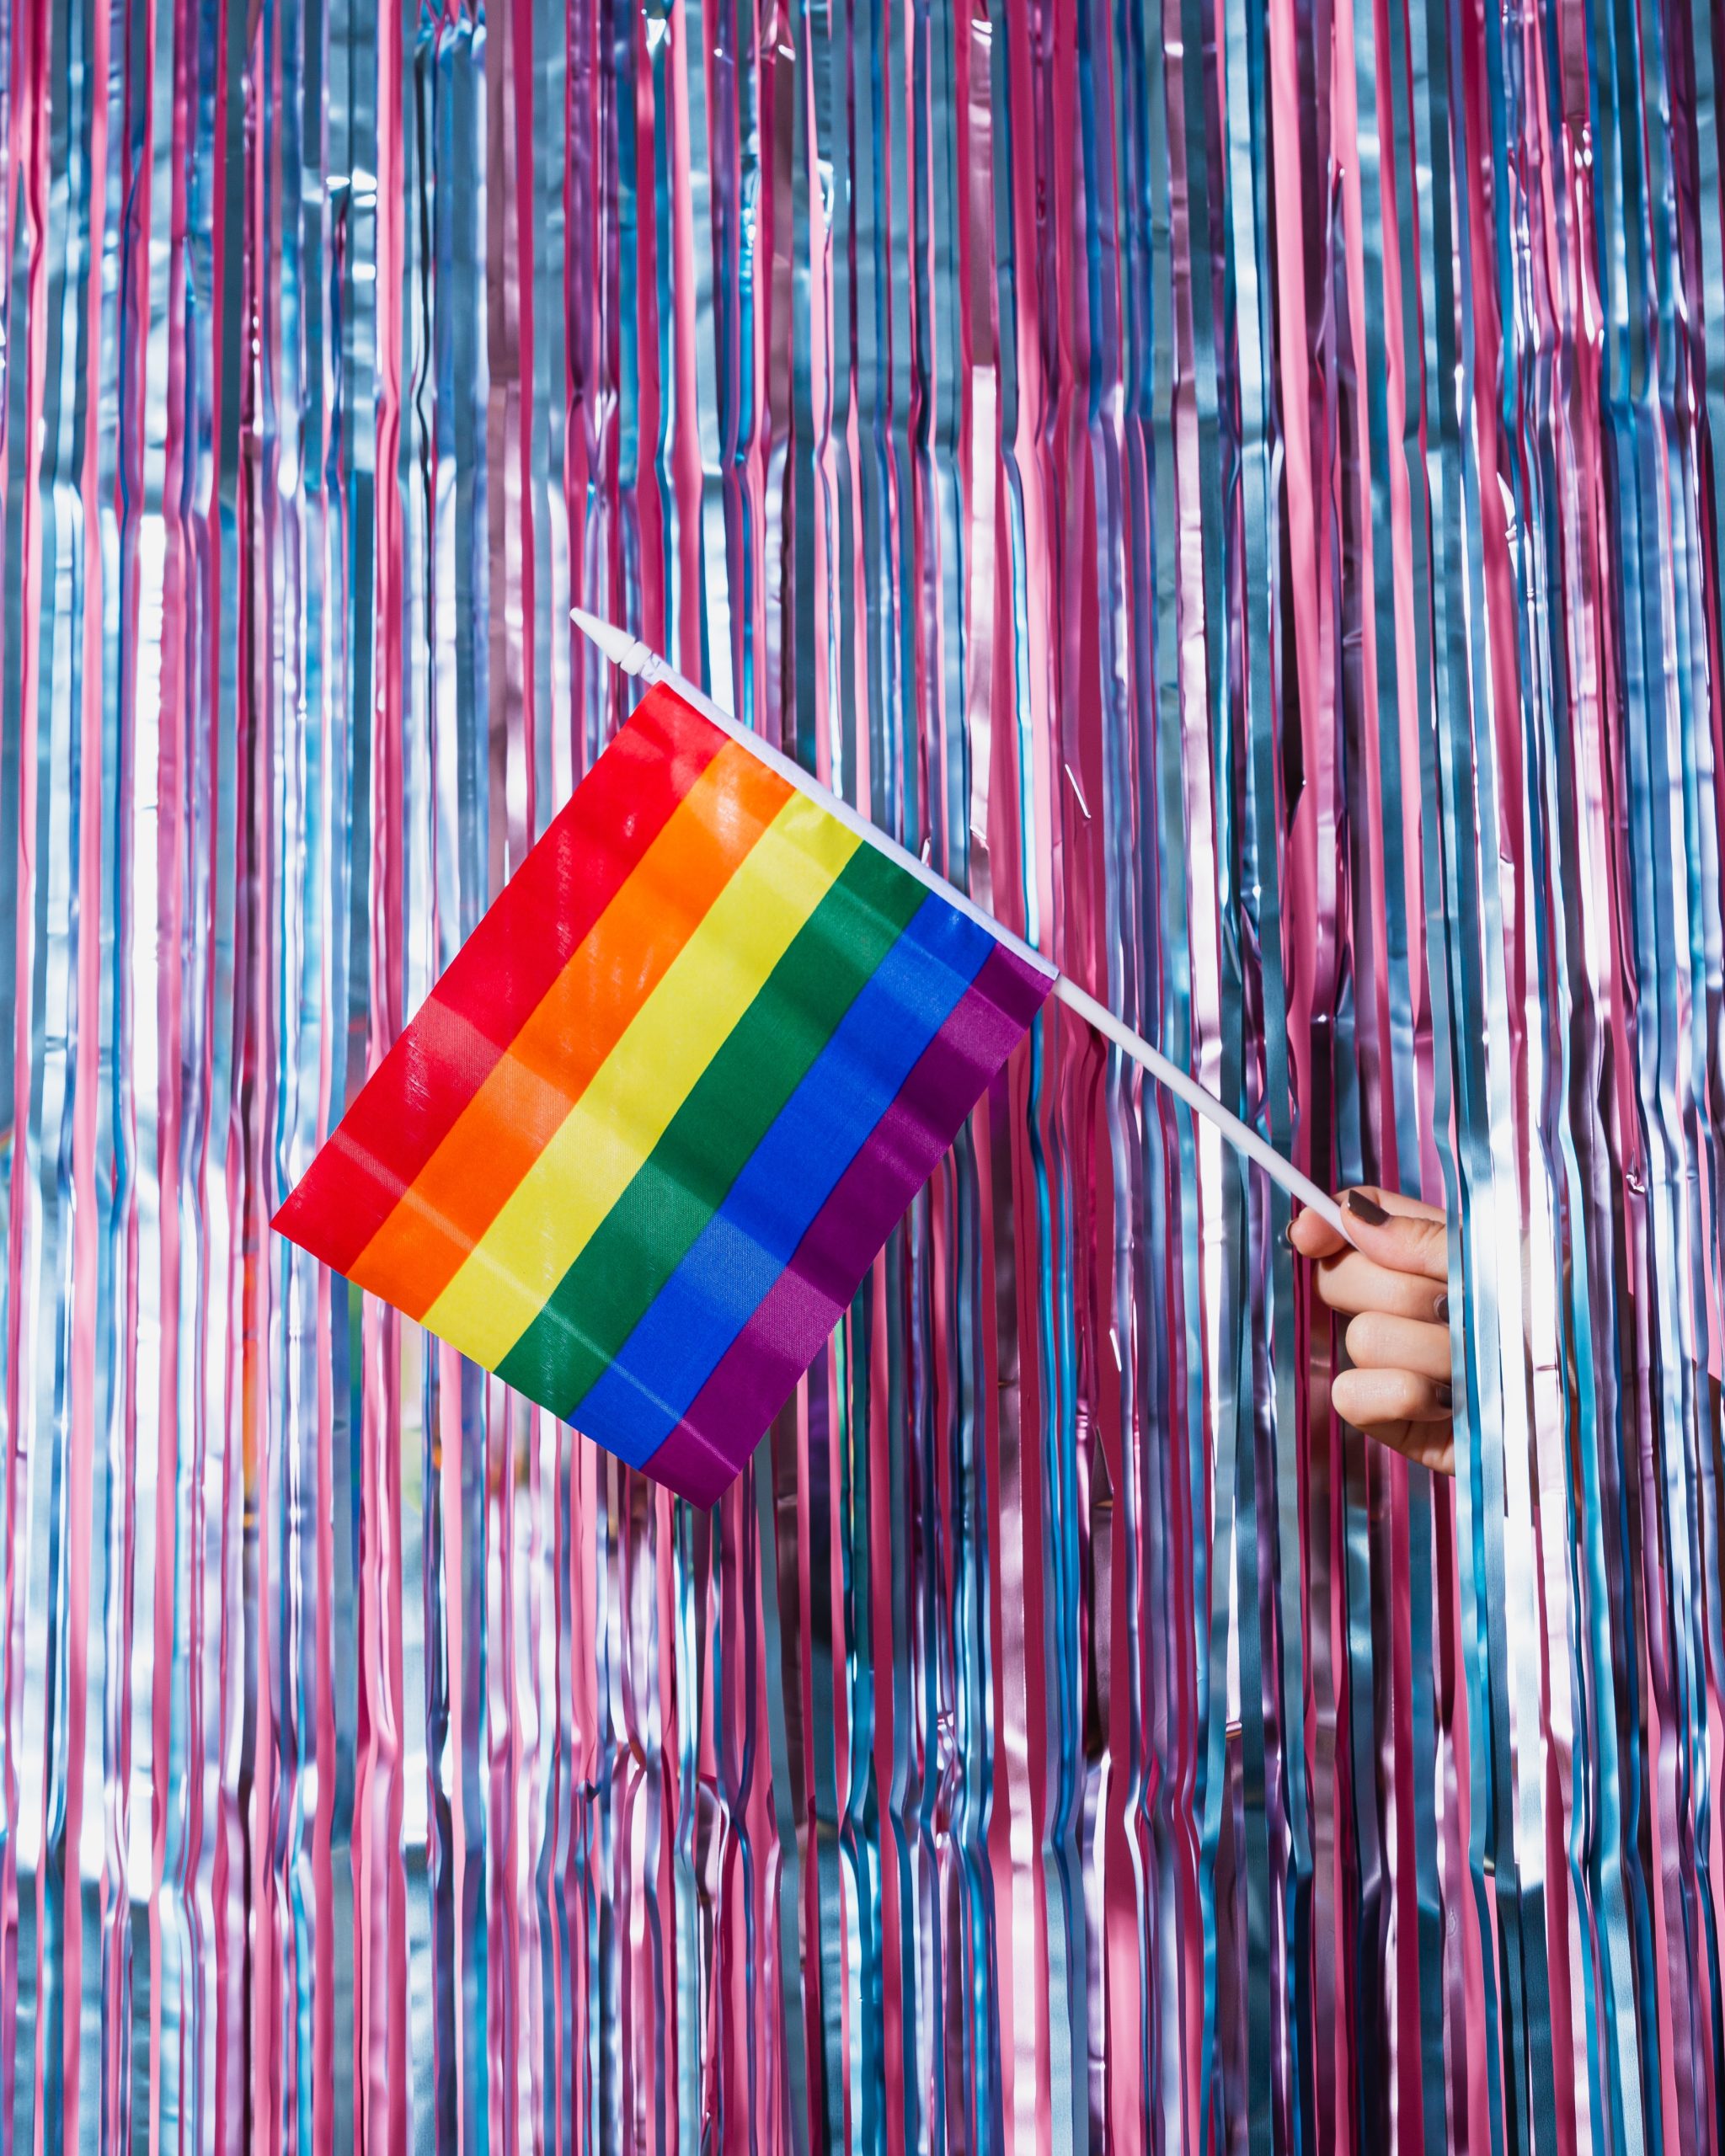 LGBTV: Representation on television